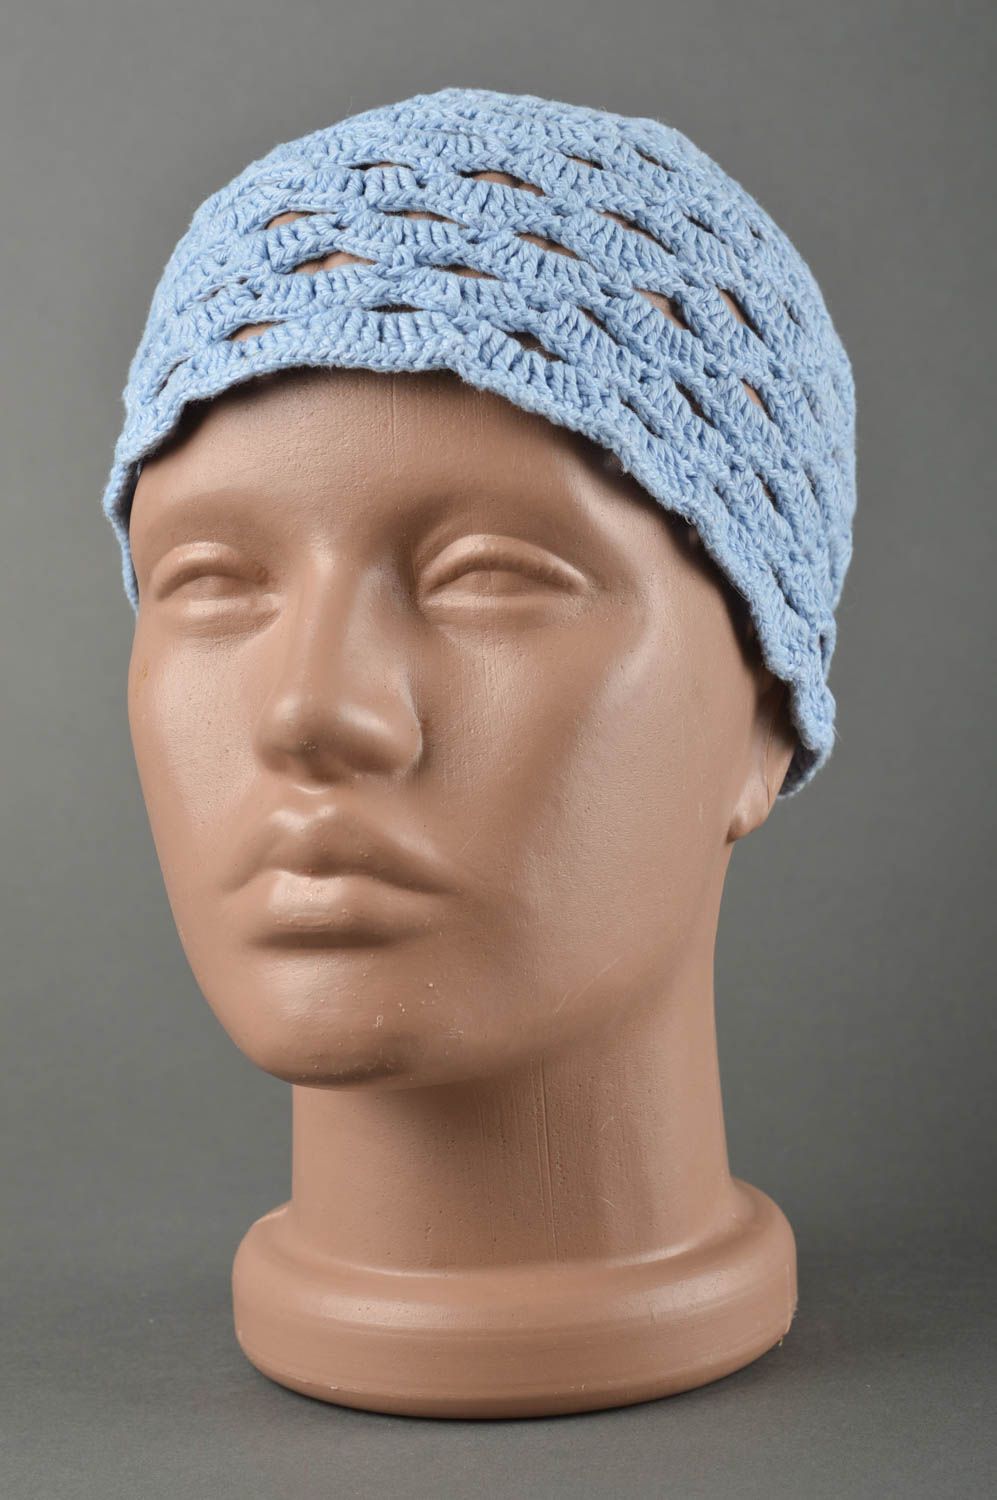 Crochet baby hat cute baby hats accessories for girls handmade summer hats photo 1